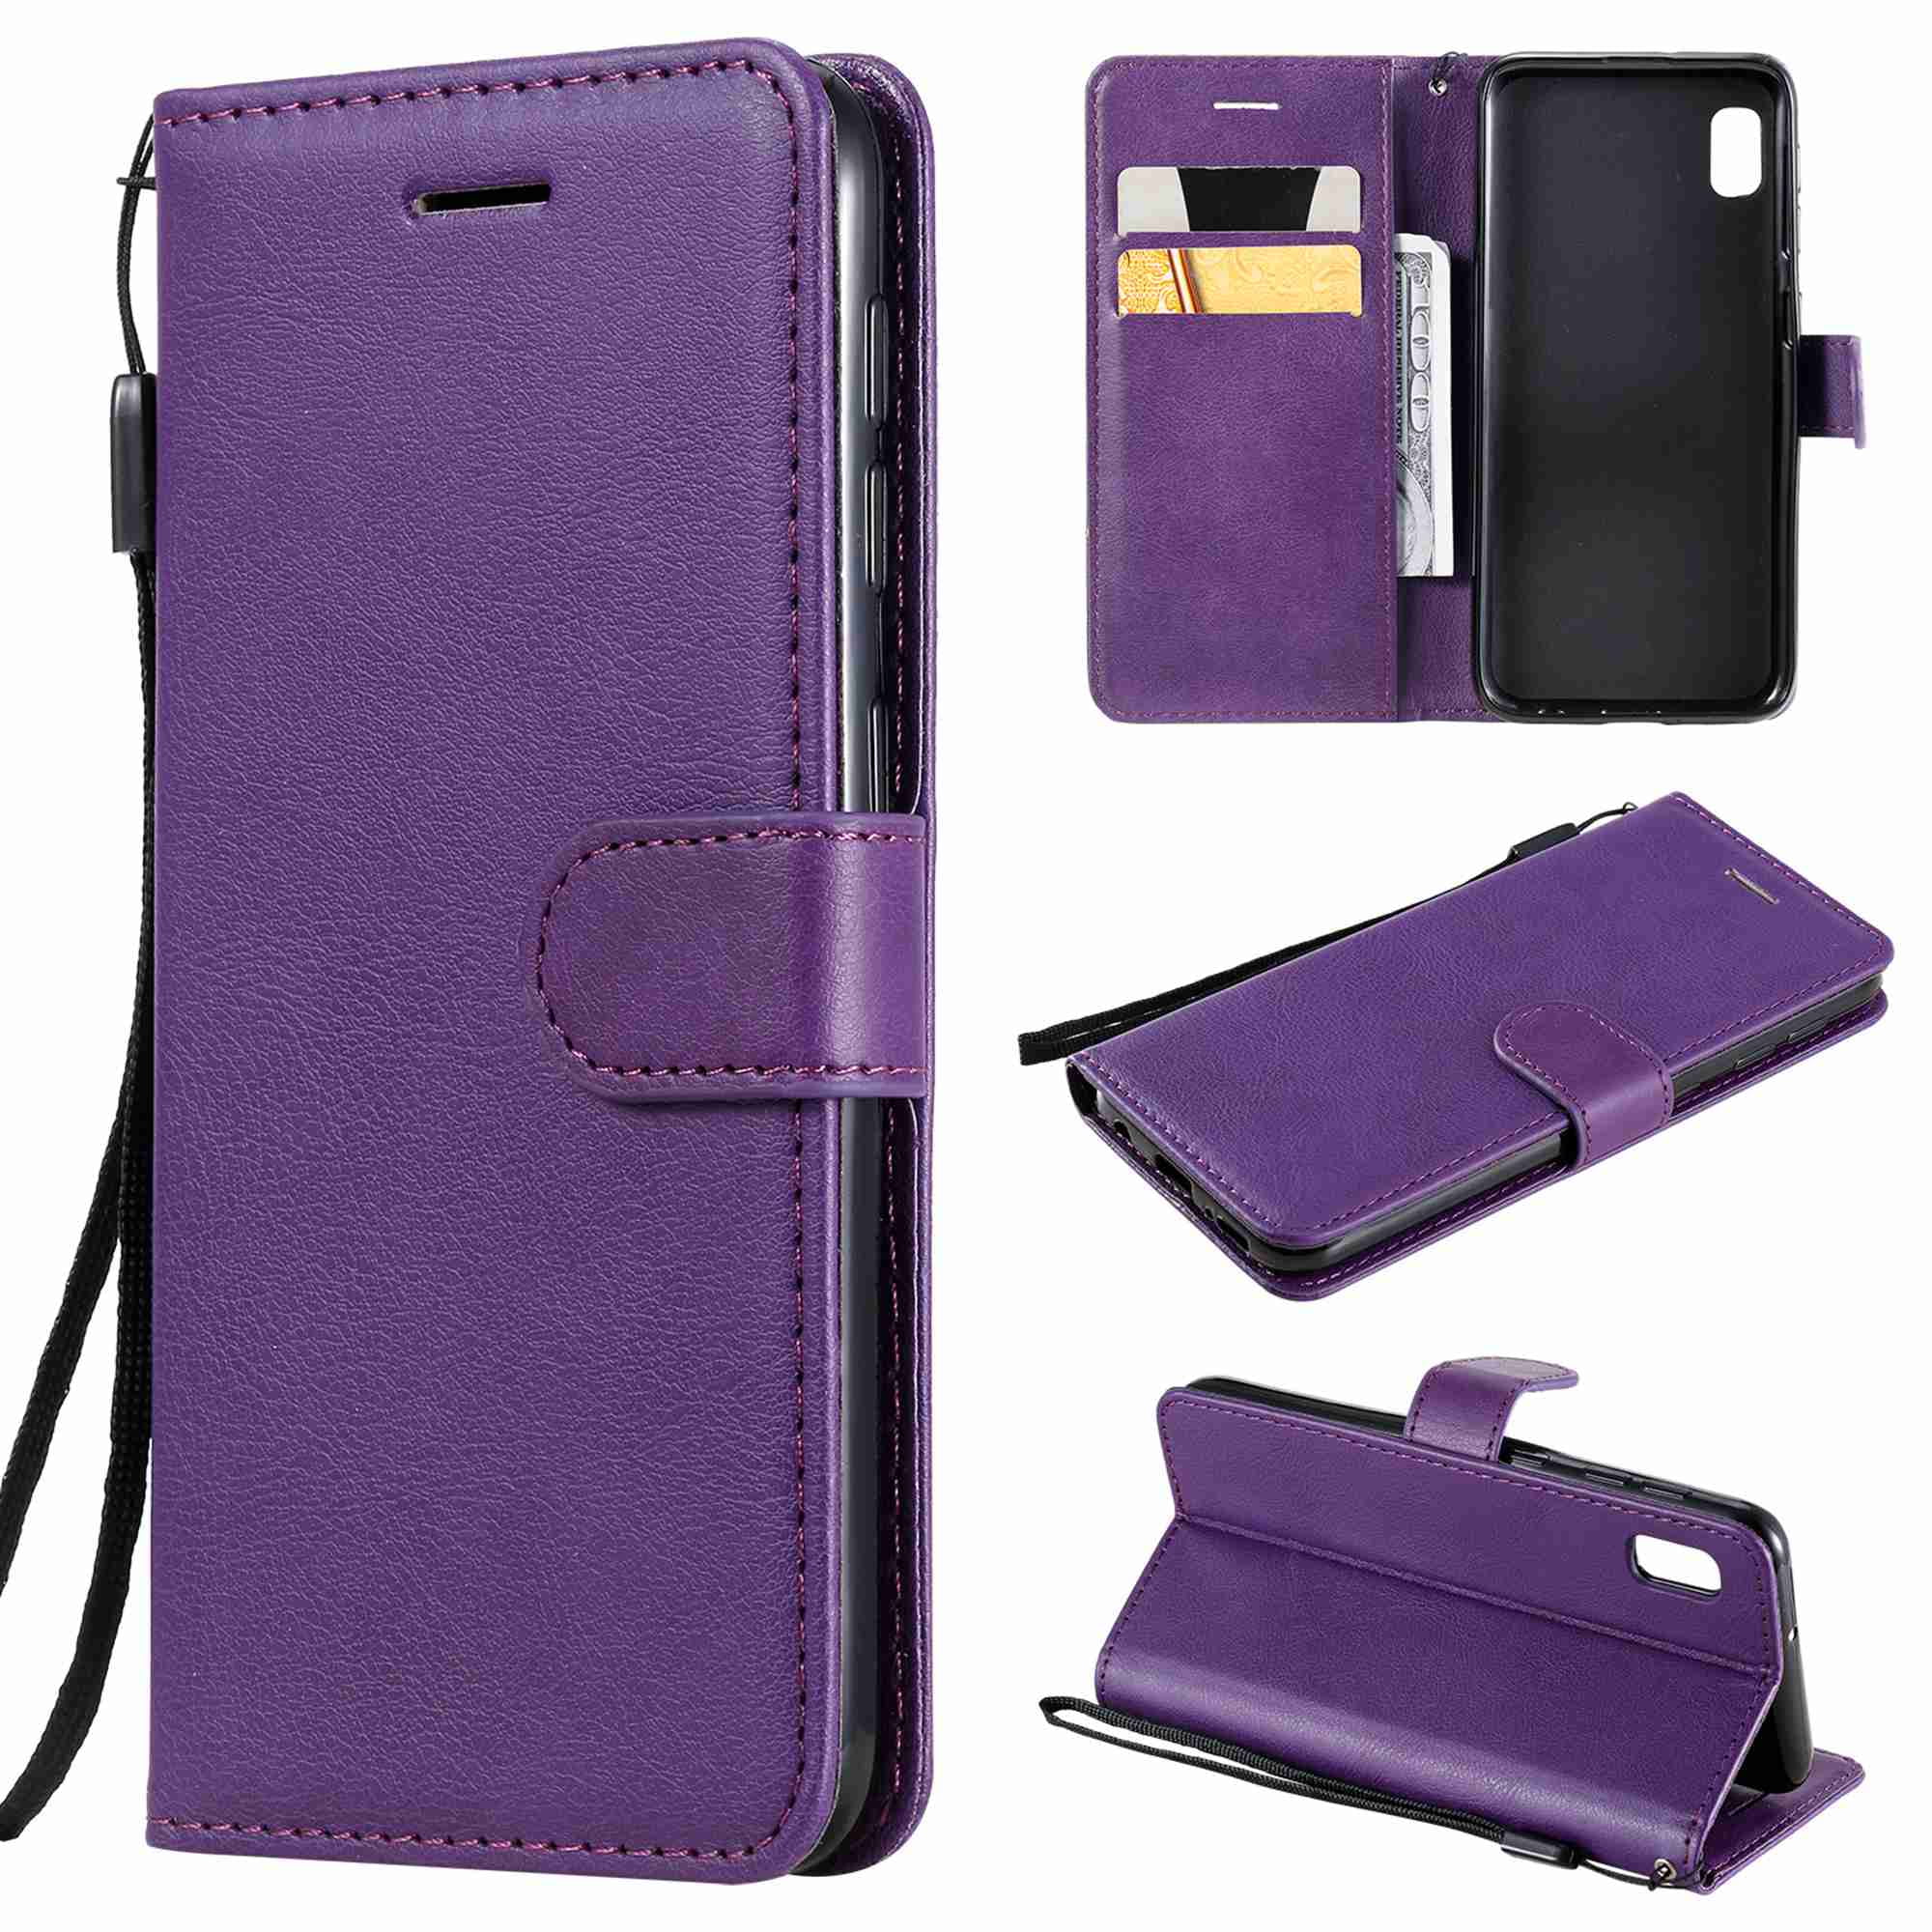 Dteck Galaxy A10E Wallet Case, Premium PU Leather Wallet Flip